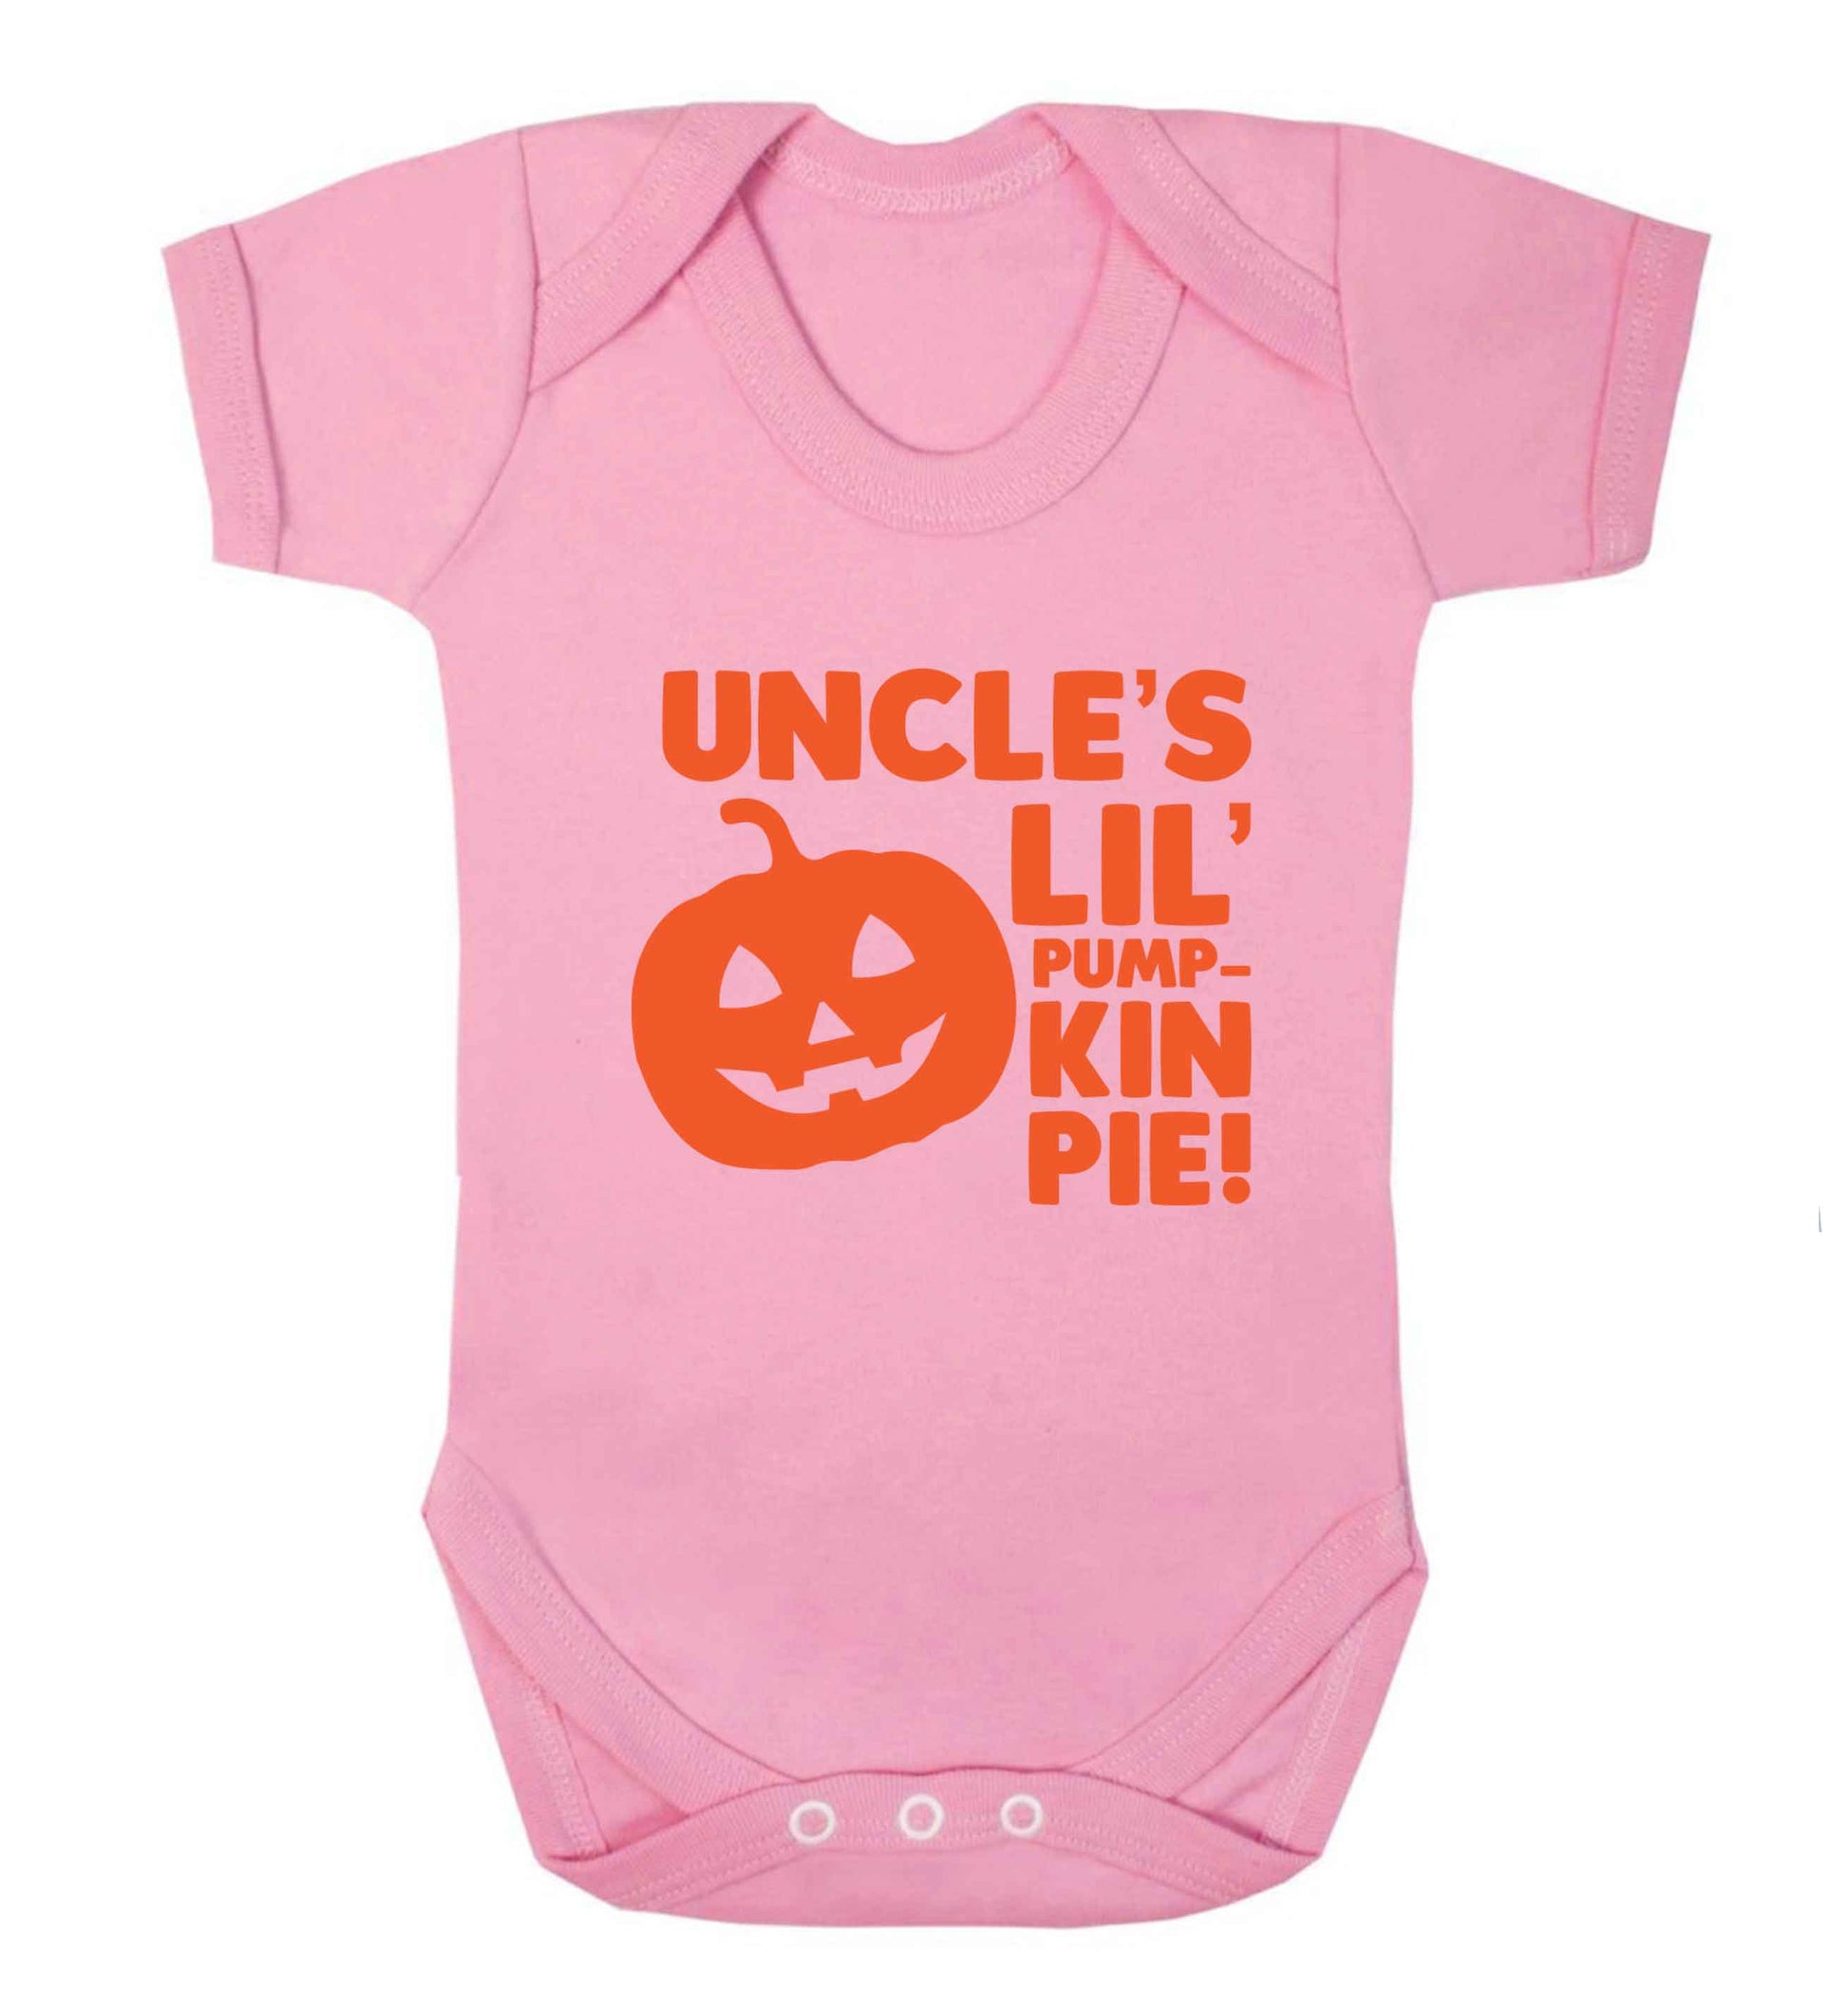 Uncle's lil' pumpkin pie baby vest pale pink 18-24 months